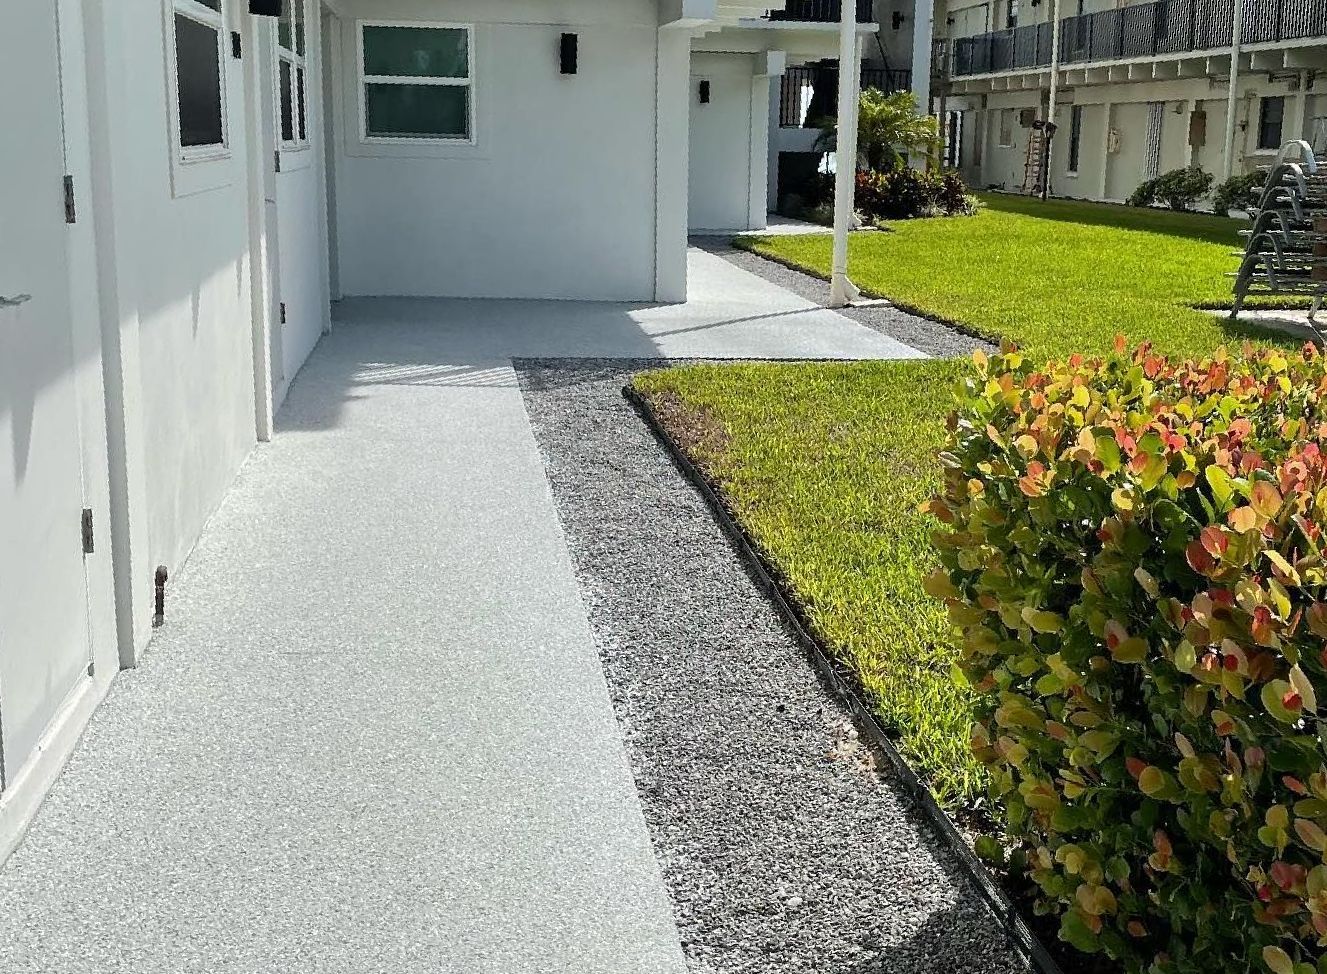 Condo walkway with concrete coating